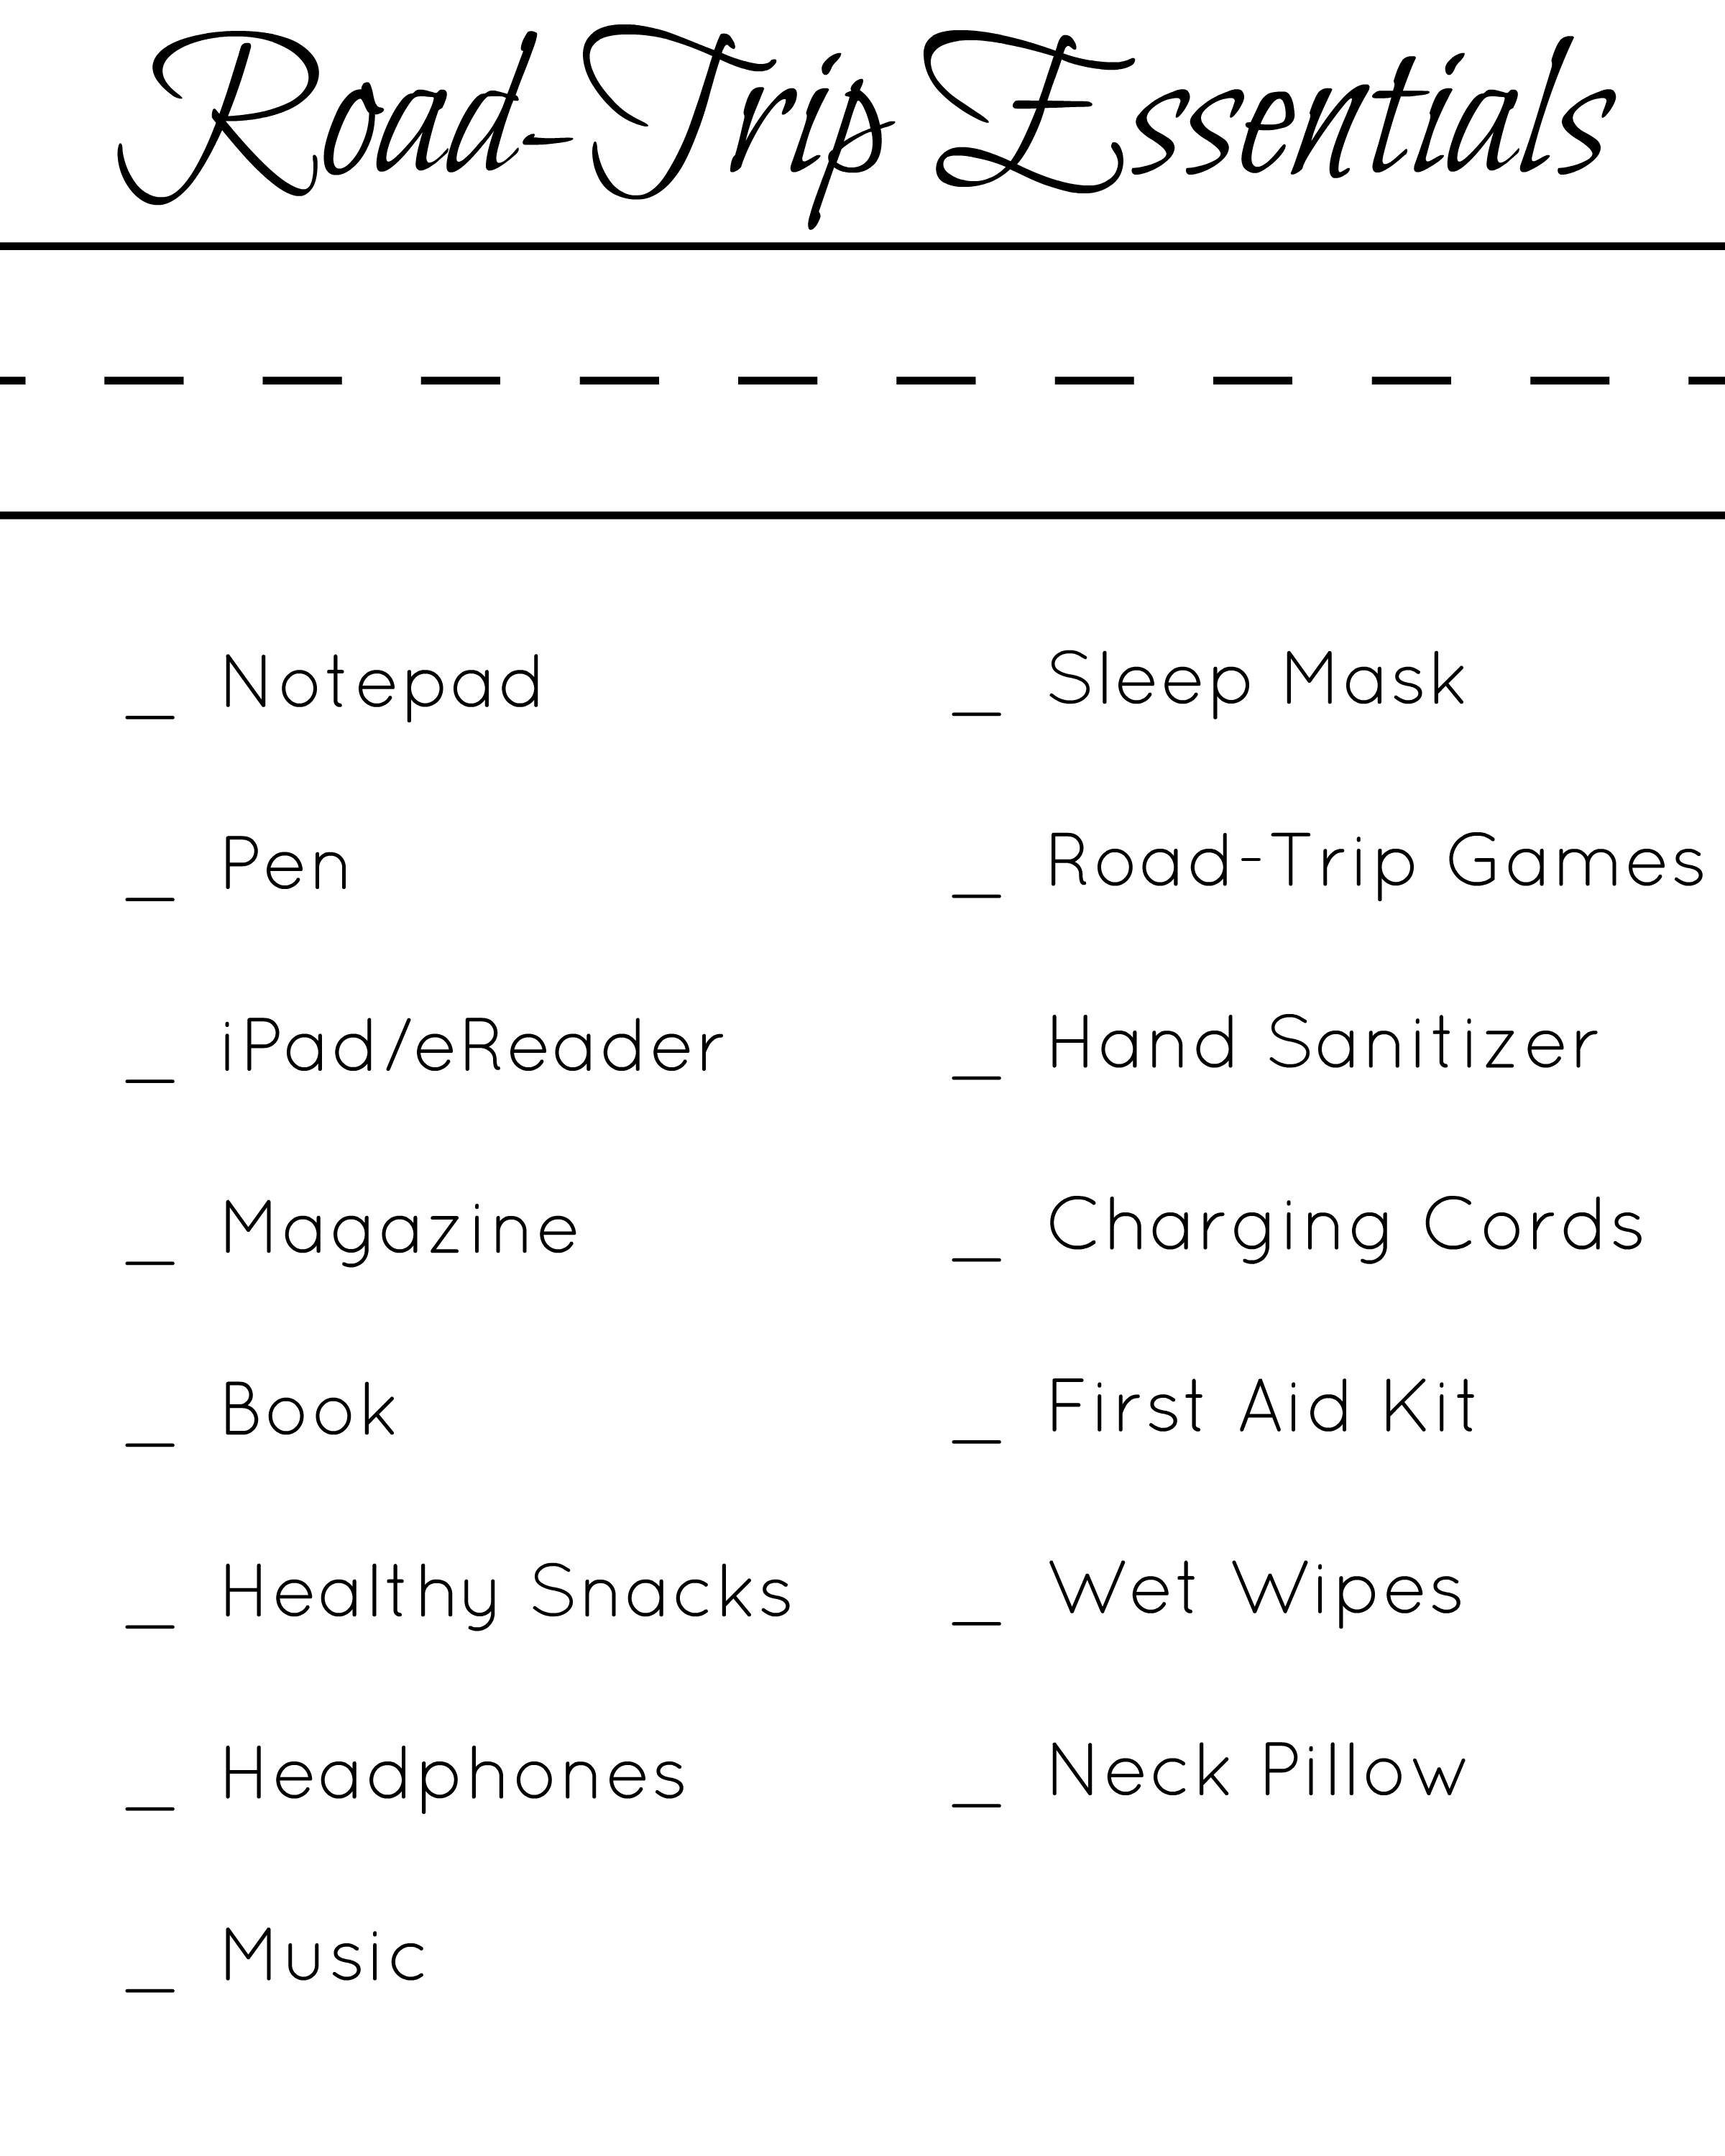 https://lifefamilyjoy.com/wp-content/uploads/2015/06/Road-Trip-Essentials-Packing-List.jpg